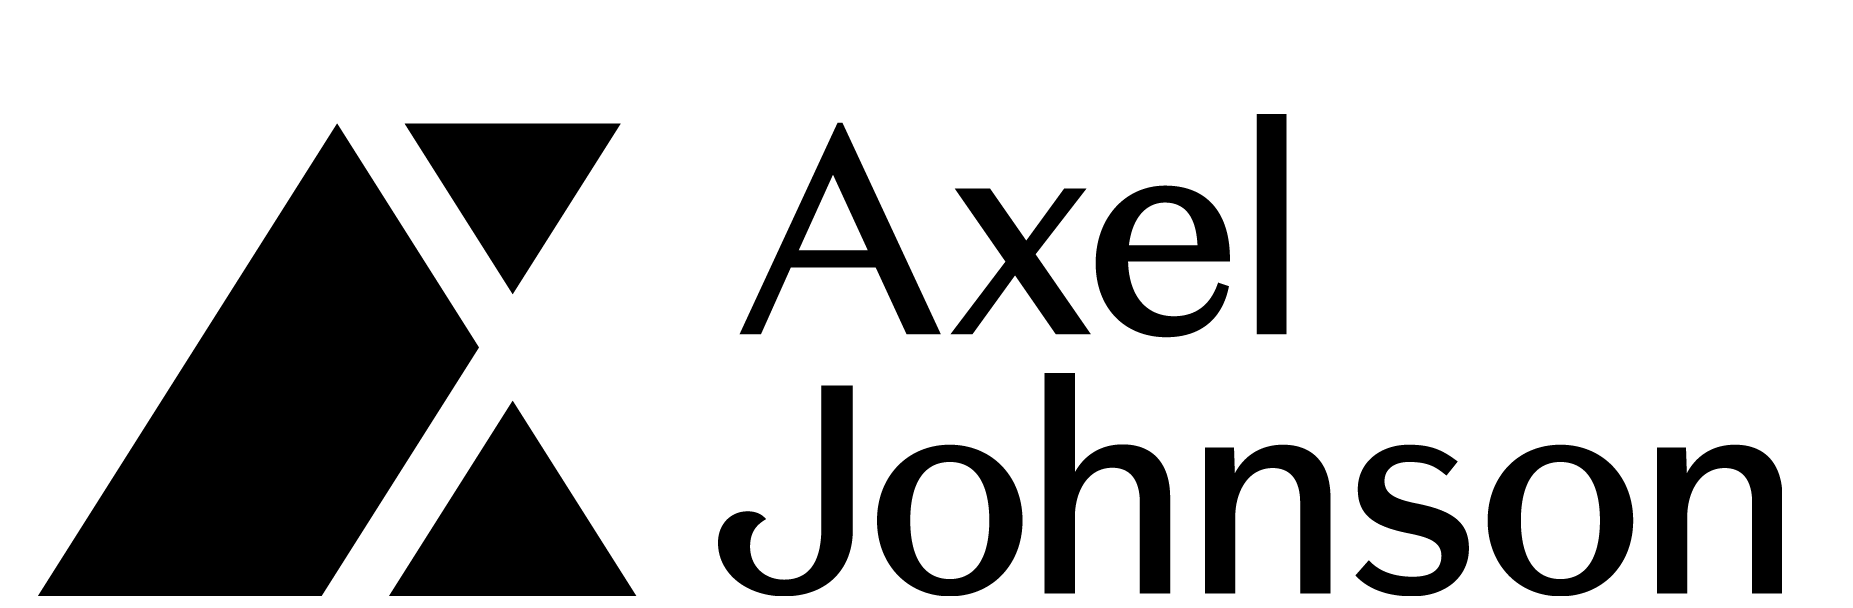 Axel Johnson